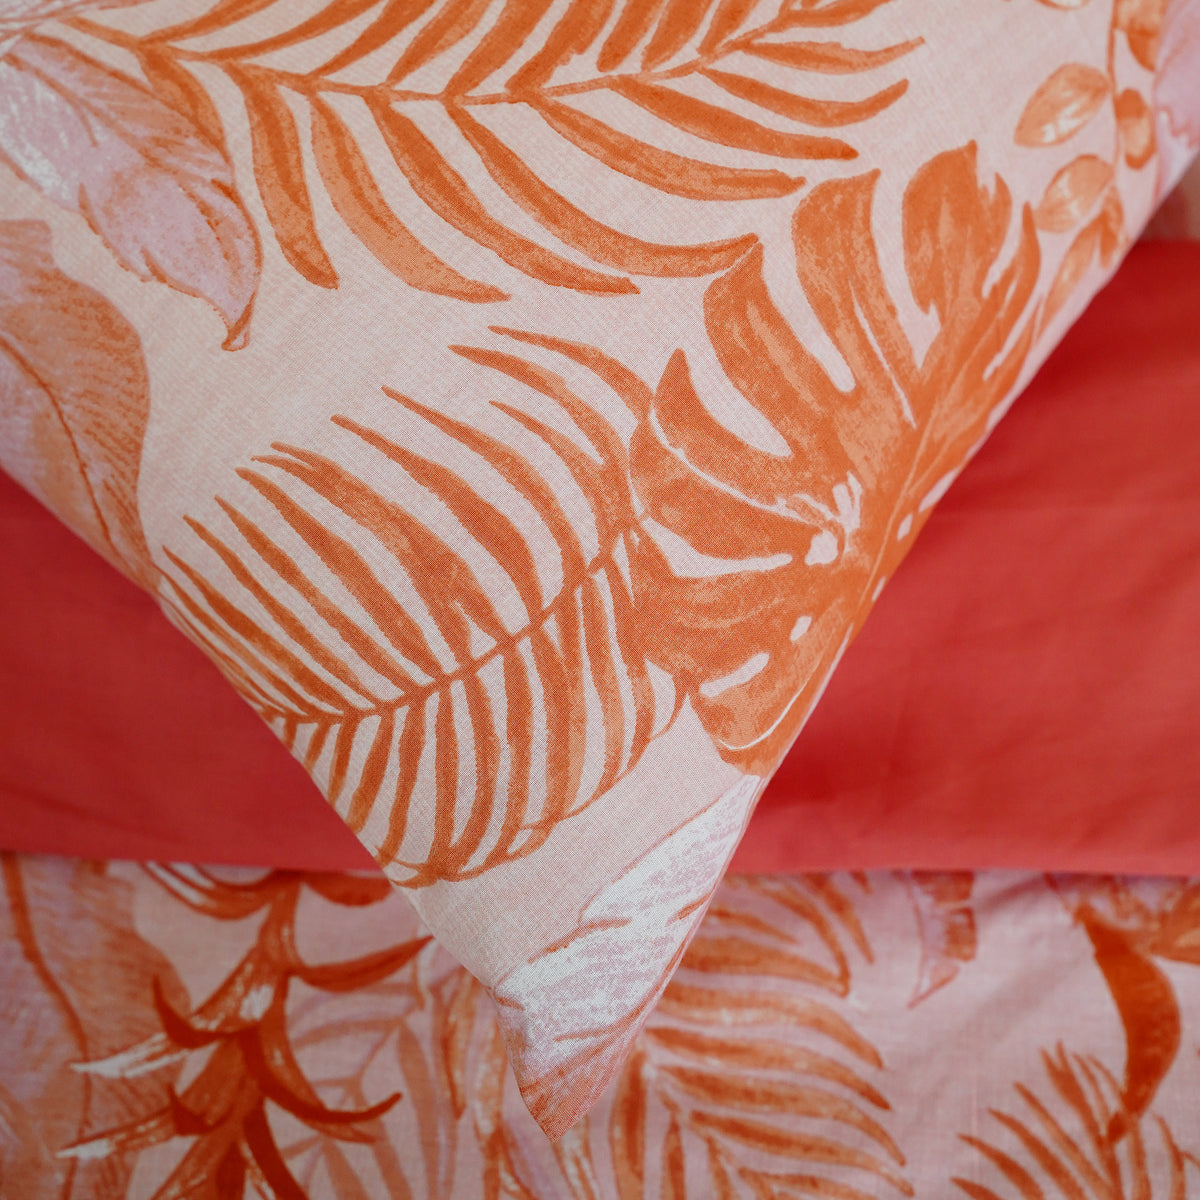 Peachy Palm Single Bedsheet Set